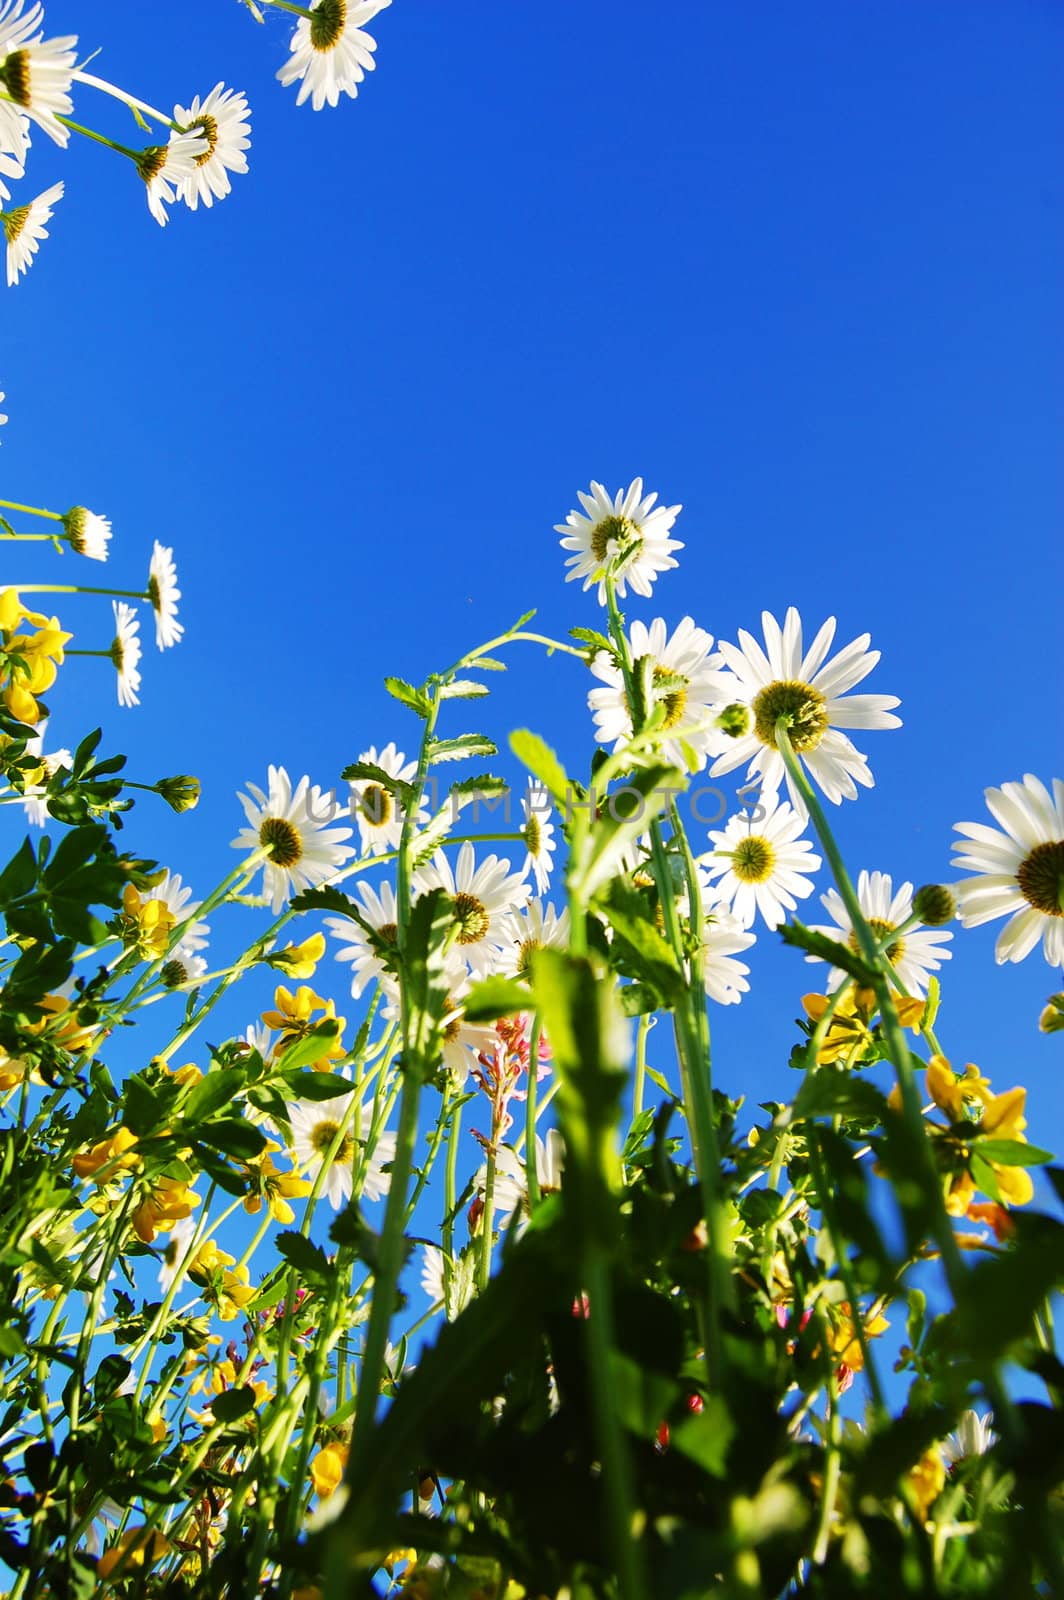 daisy flower in summer with blue sky by gunnar3000